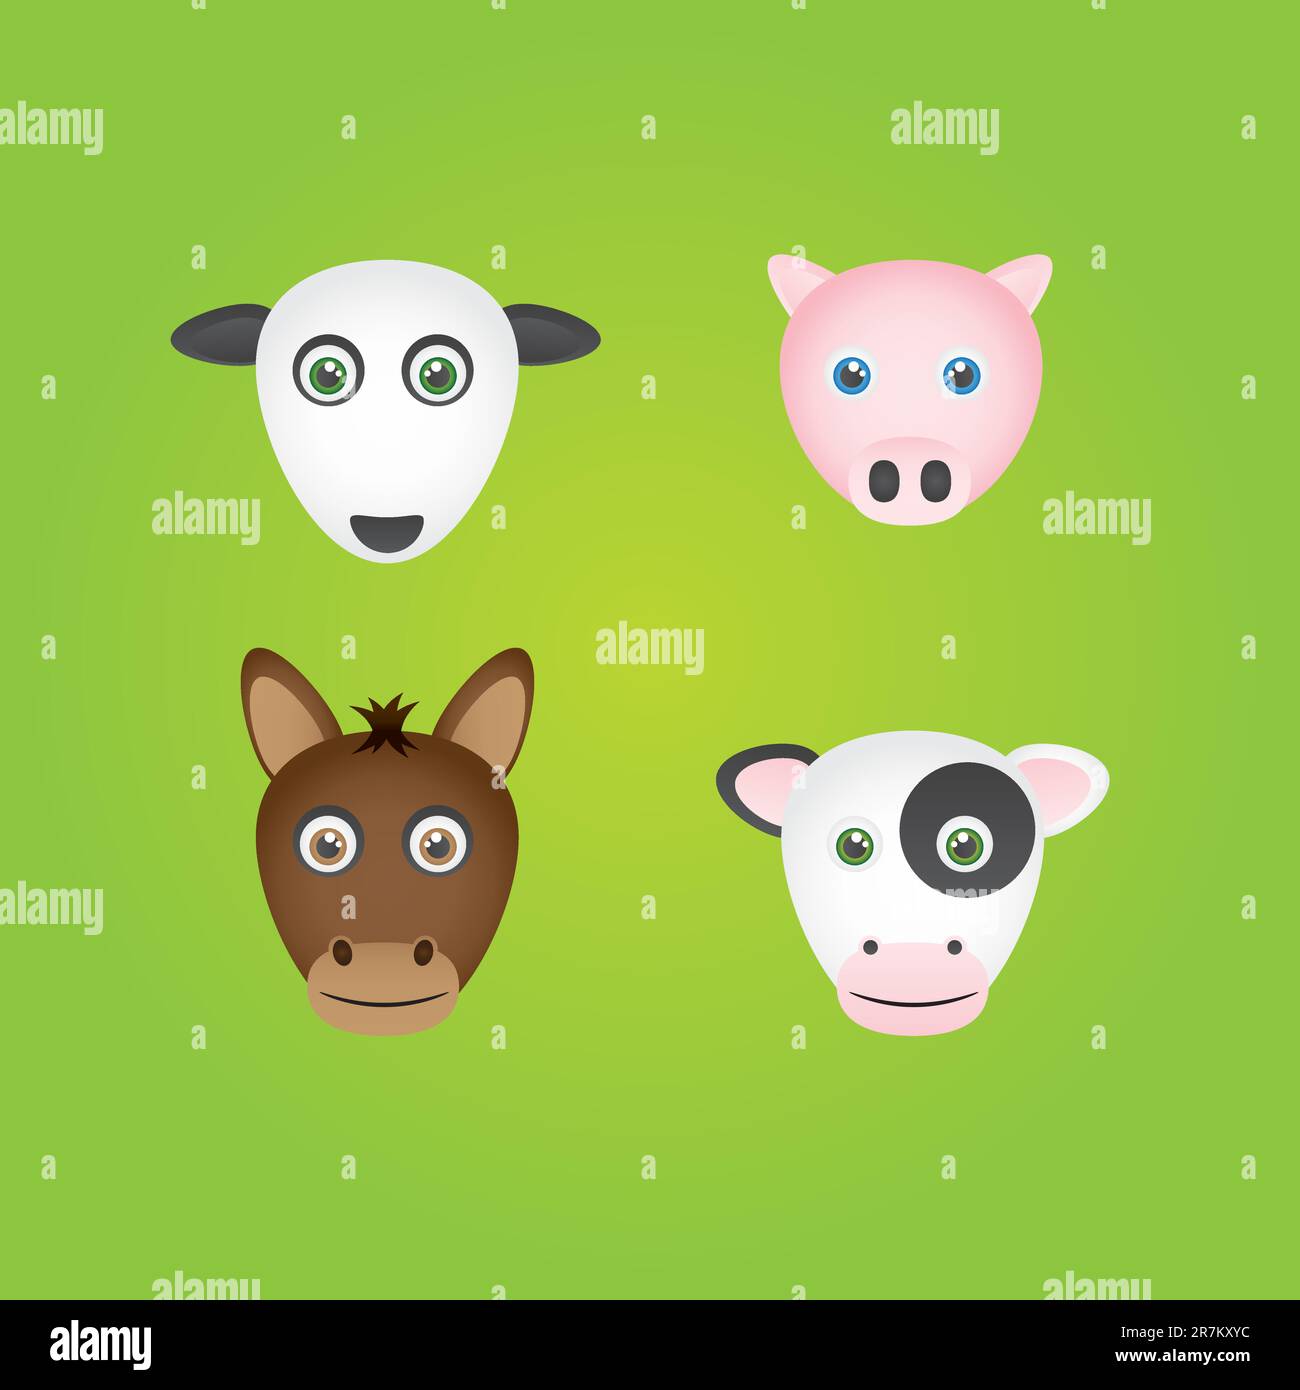 4 farmyard animal heads - Sheep, Pig, Horse, Cow. Stock Vector